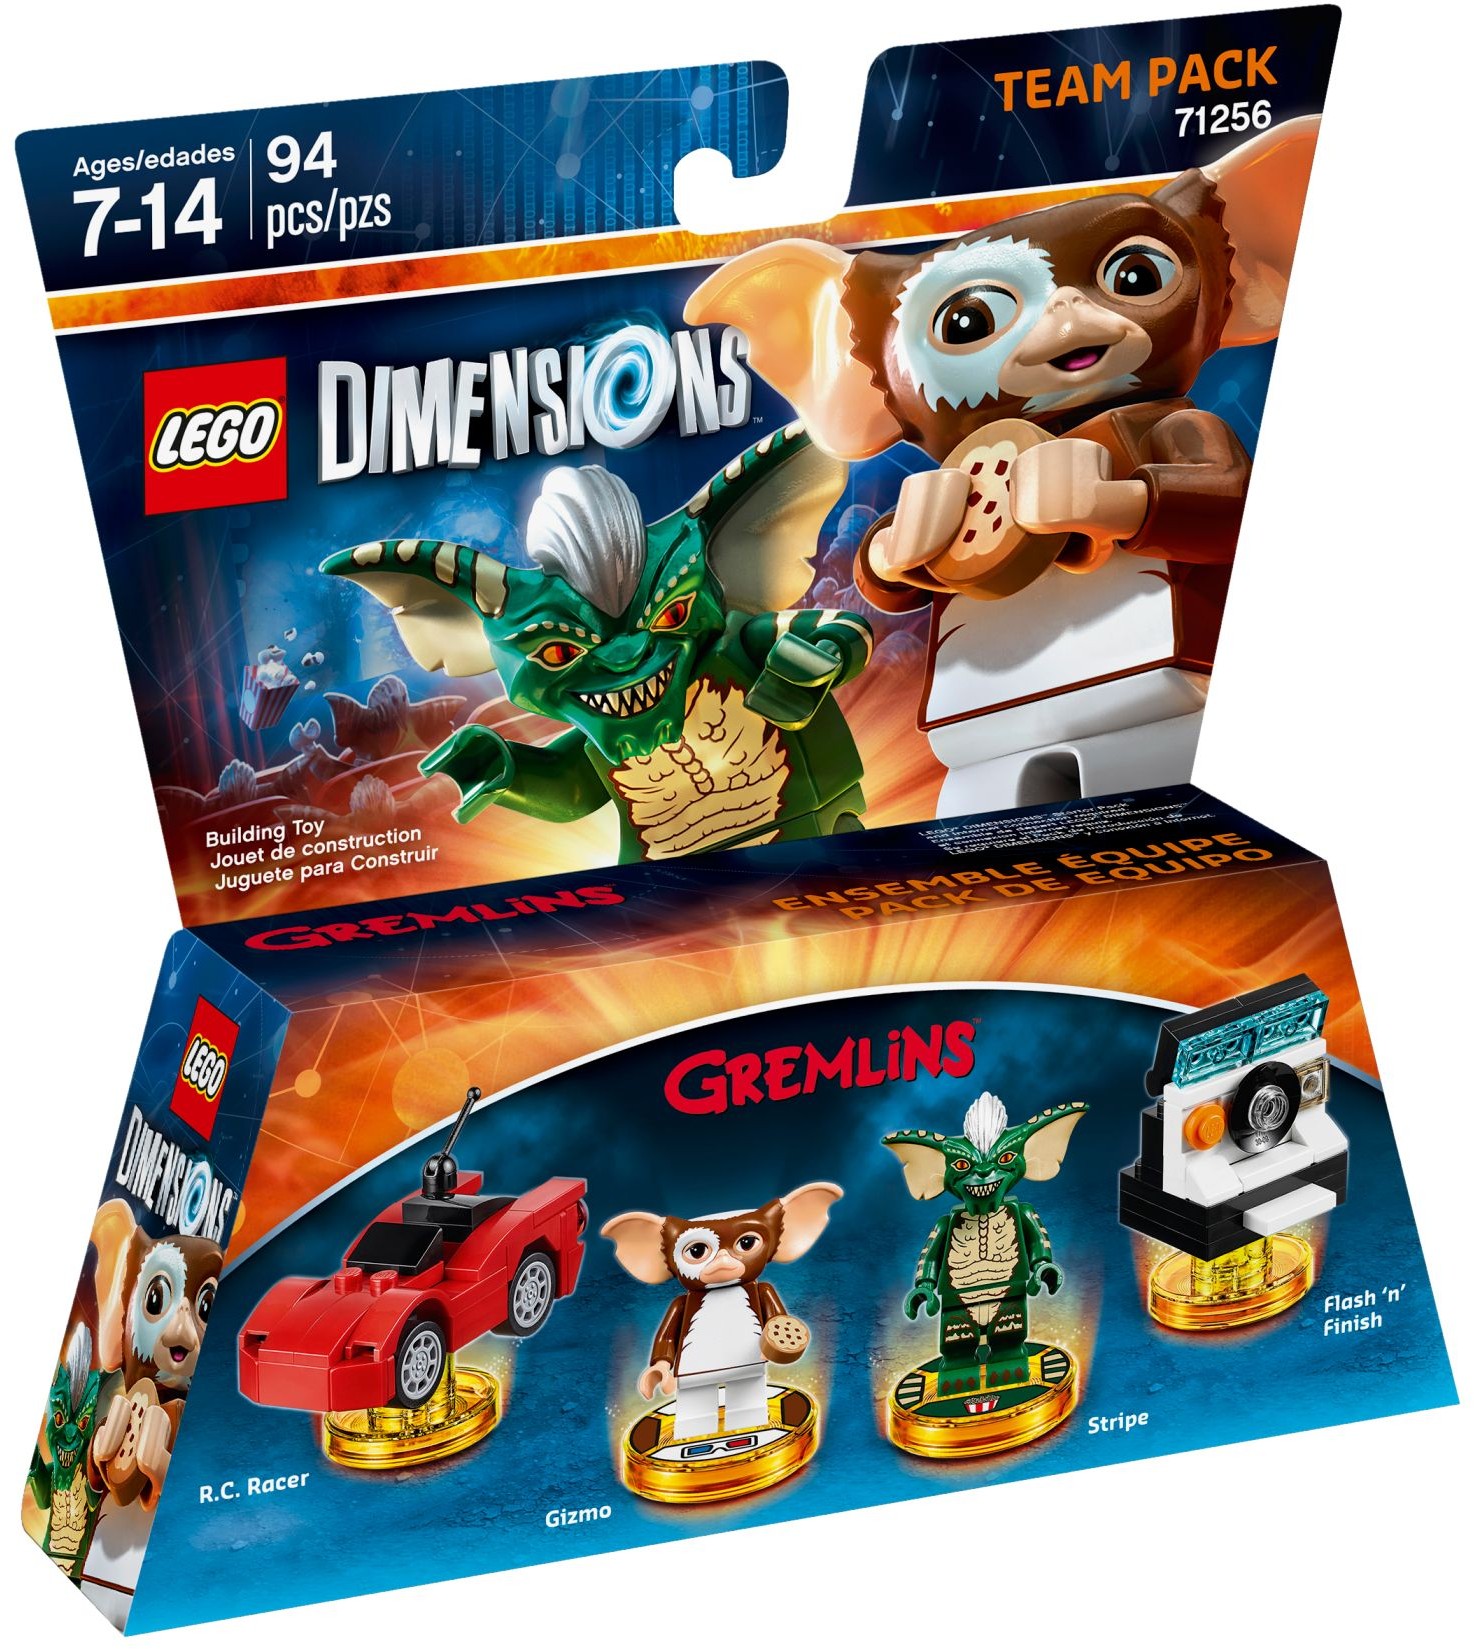 TOP LEGO Dimensions Team Pack Gremlins 71256 